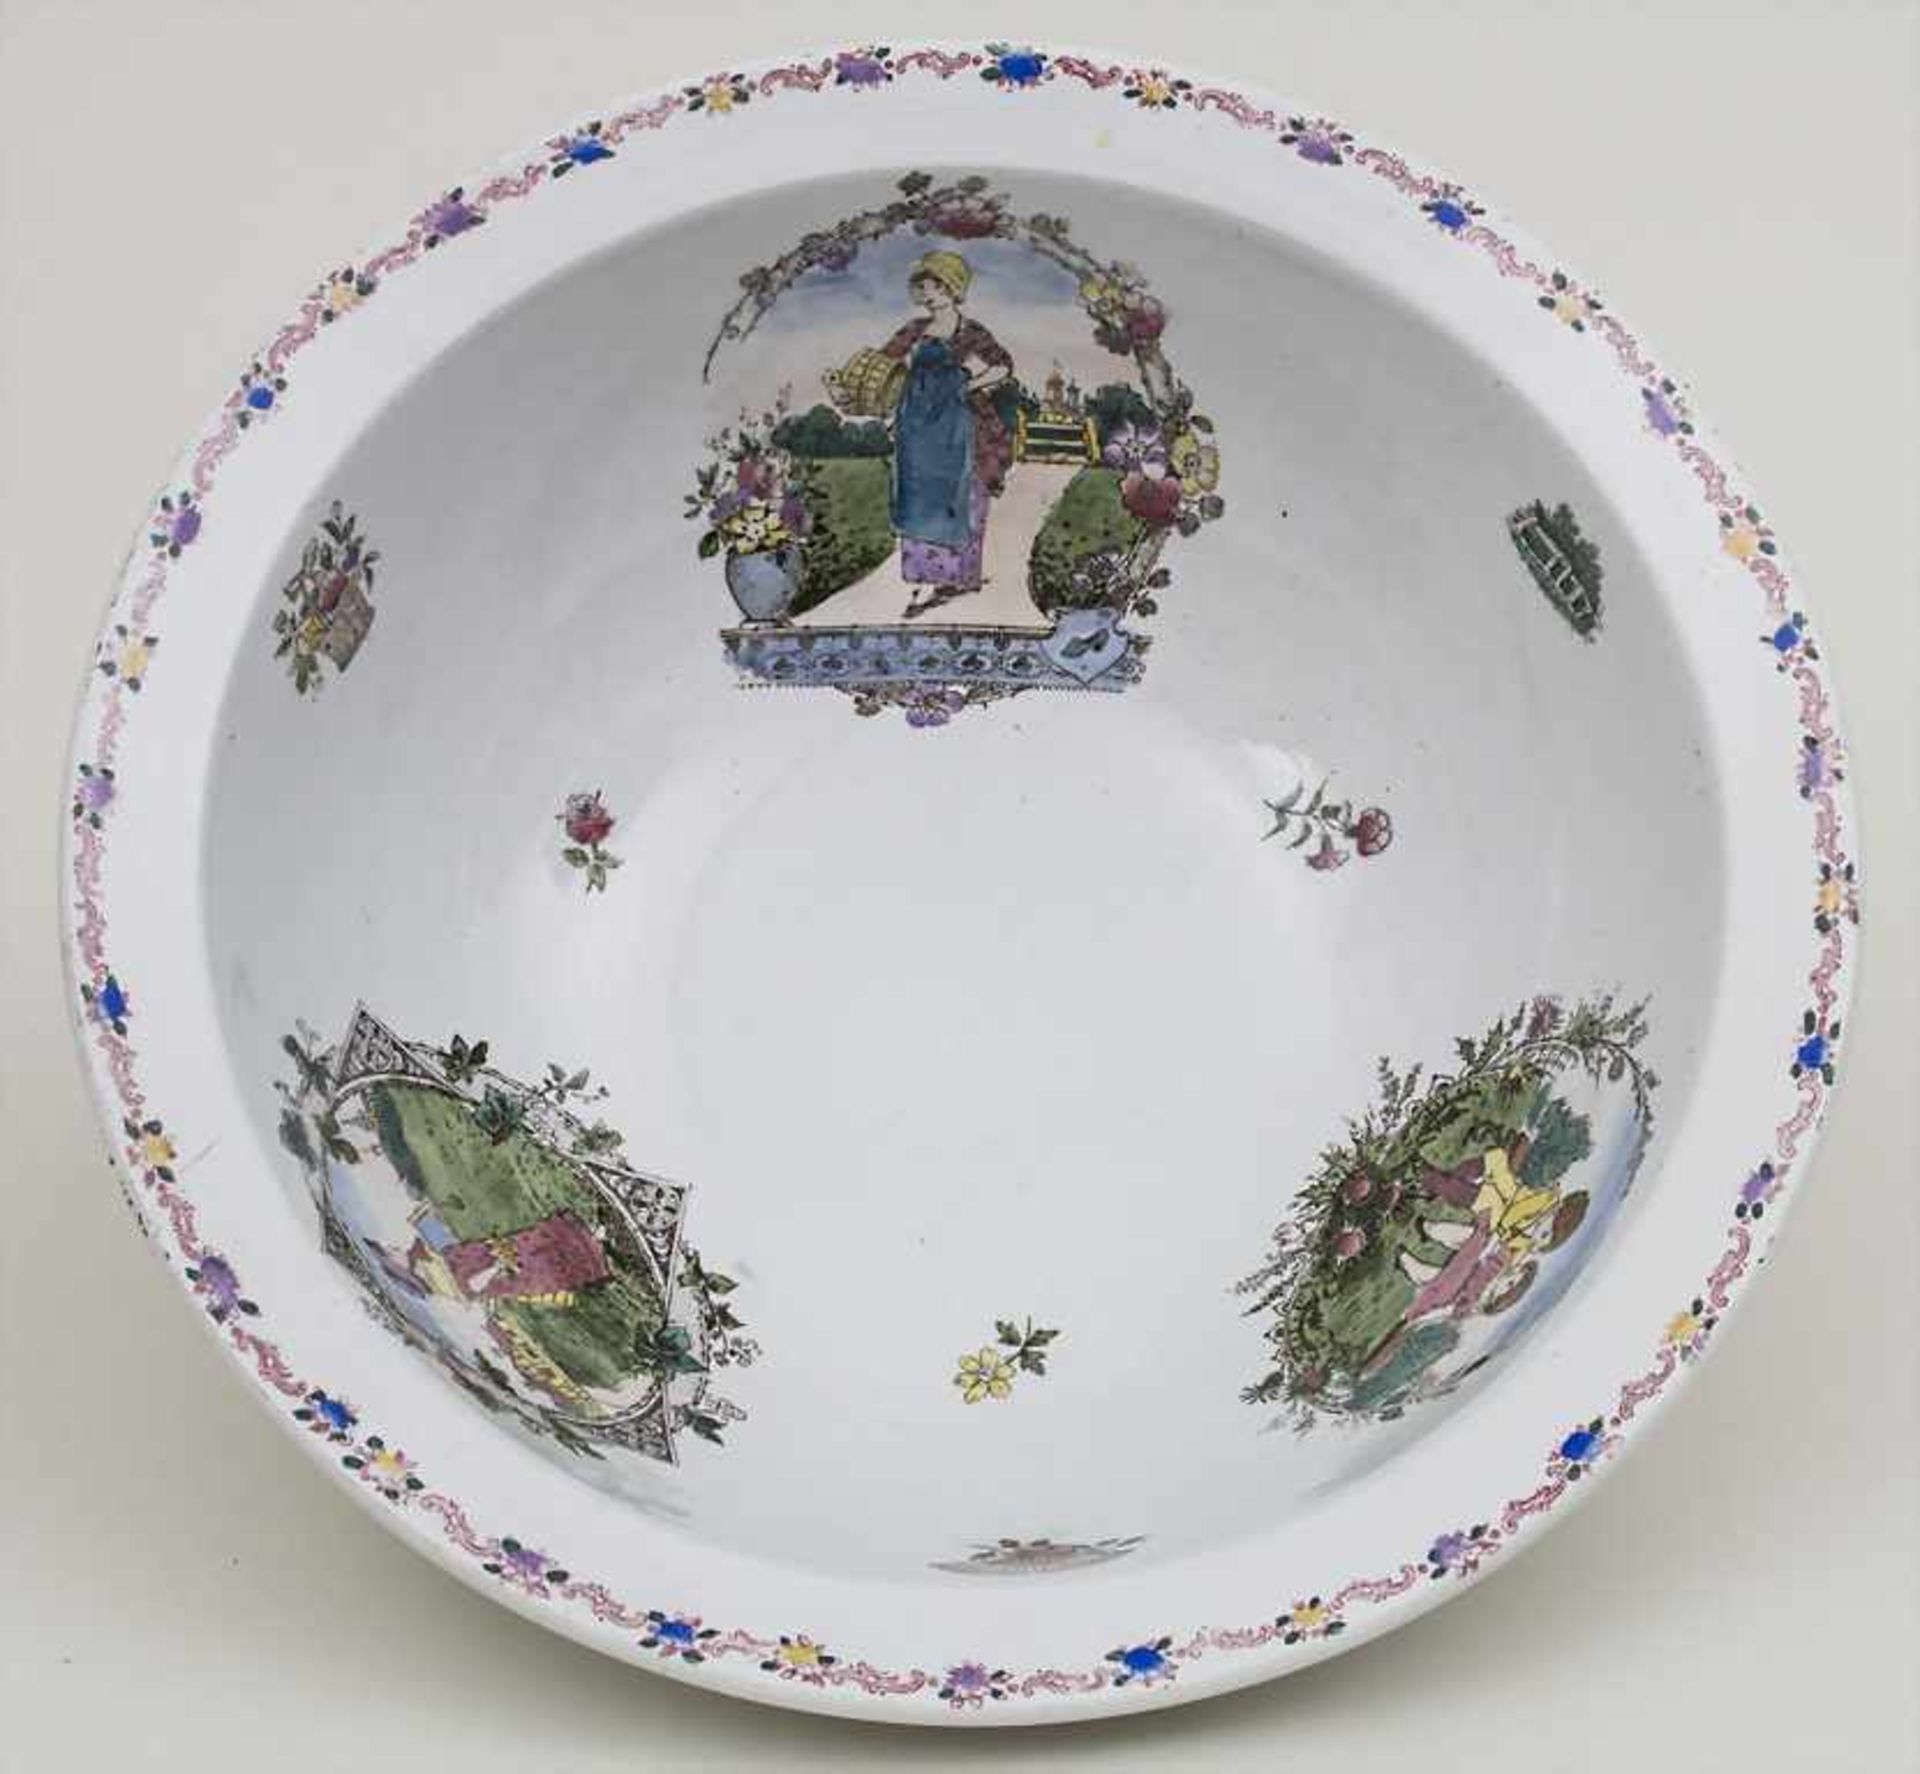 Waschschüssel mit den Lebenszyklen eines Mädchens / A wash bowl depicting the periods of life of a - Image 2 of 3